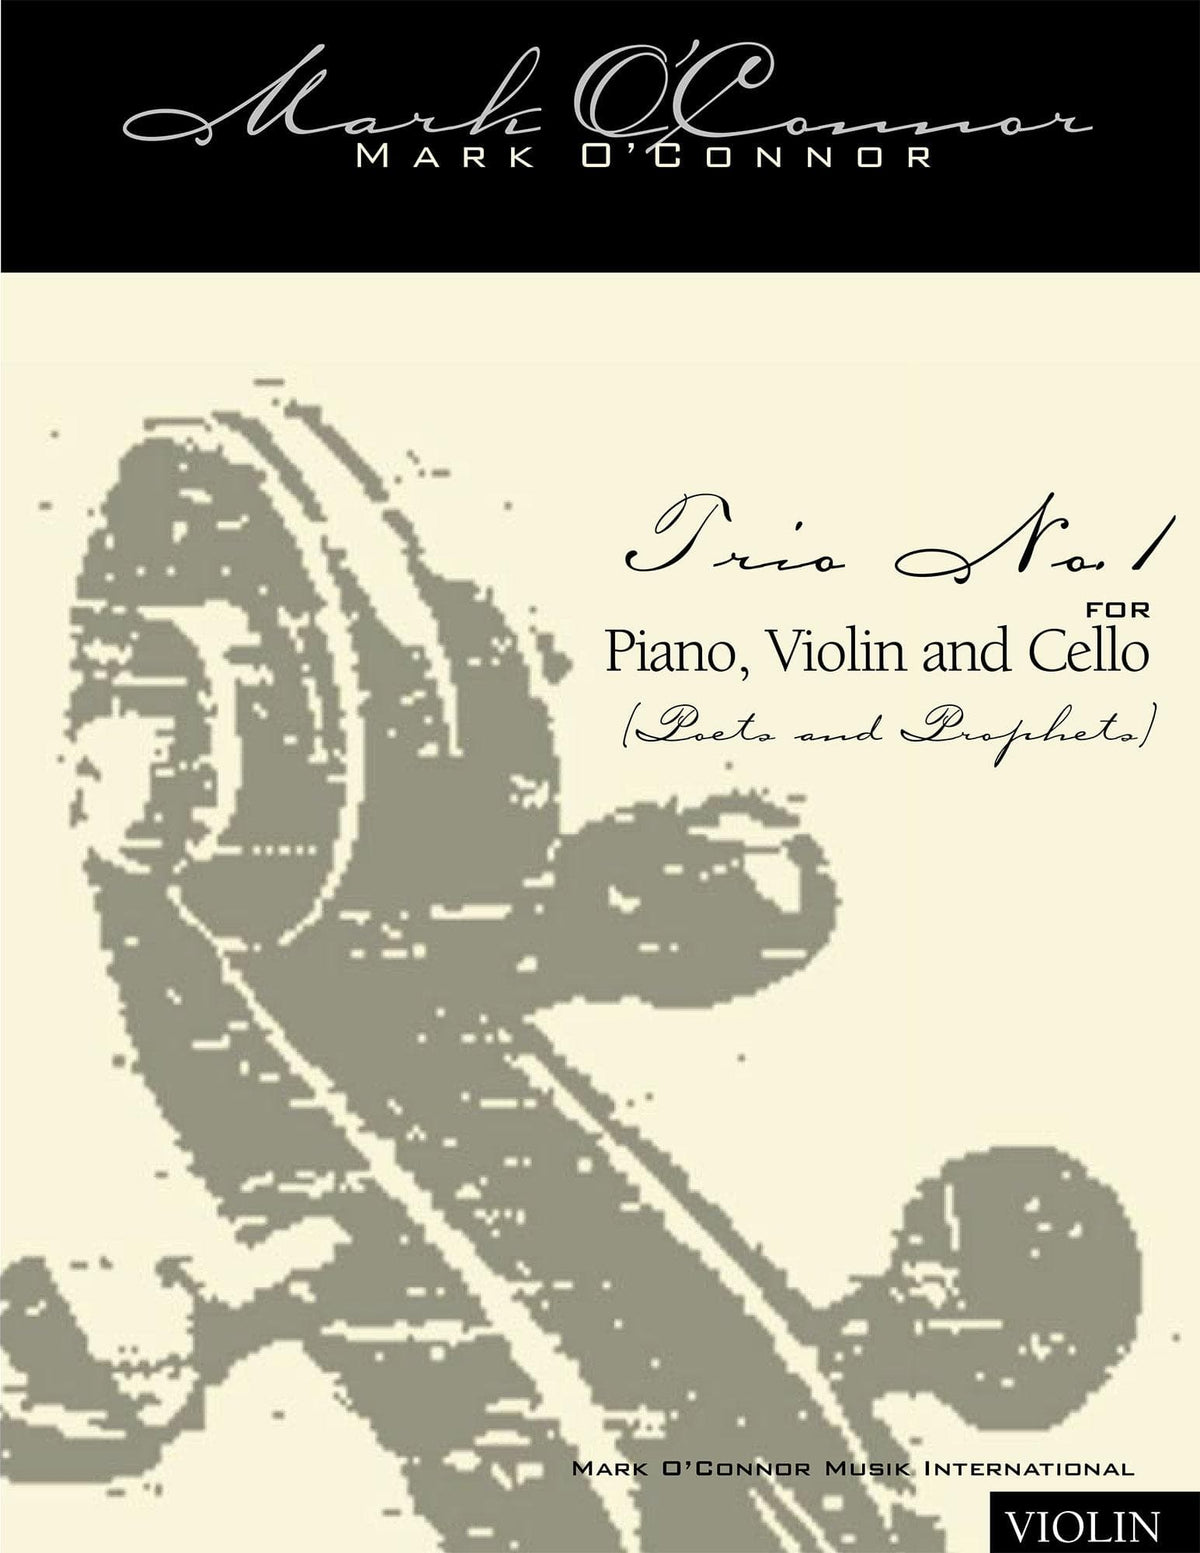 O'Connor, Mark - Trio No. 1 (Poets and Prophets) for Piano, Violin and Cello - Violin - Digital Download